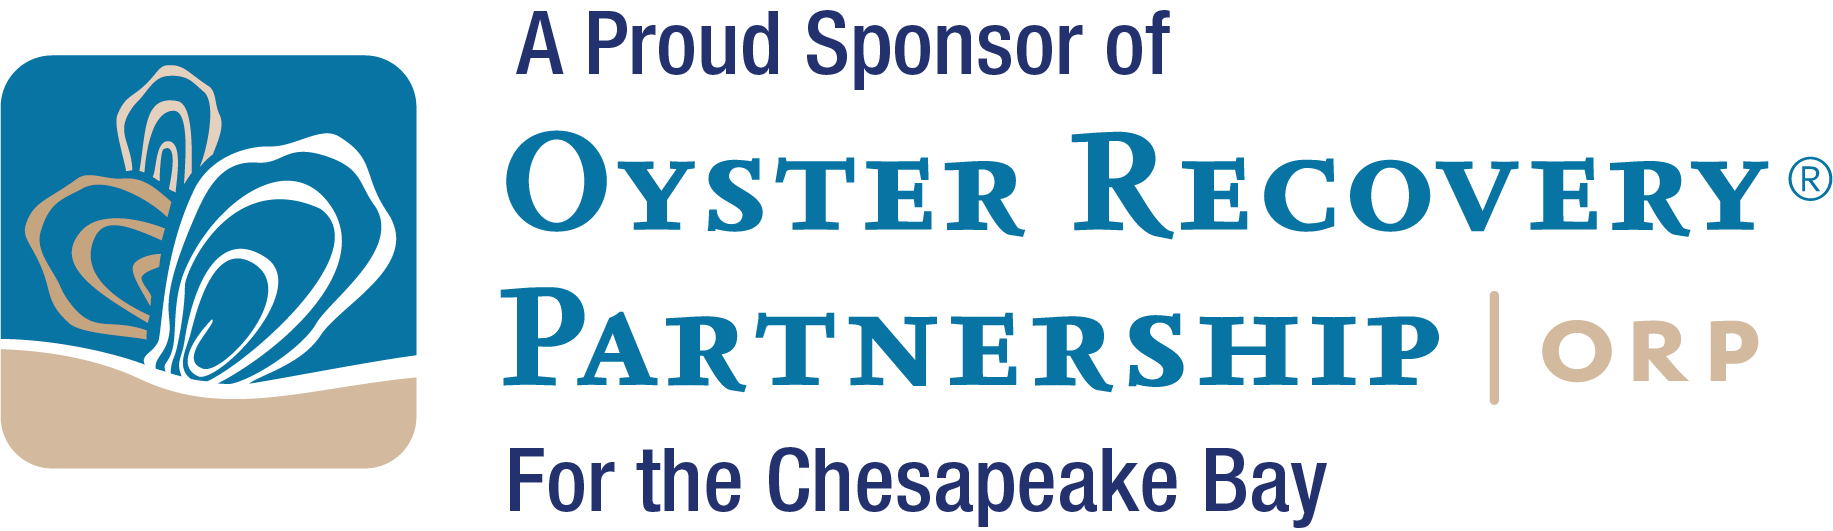 oyster recovery partnership logo